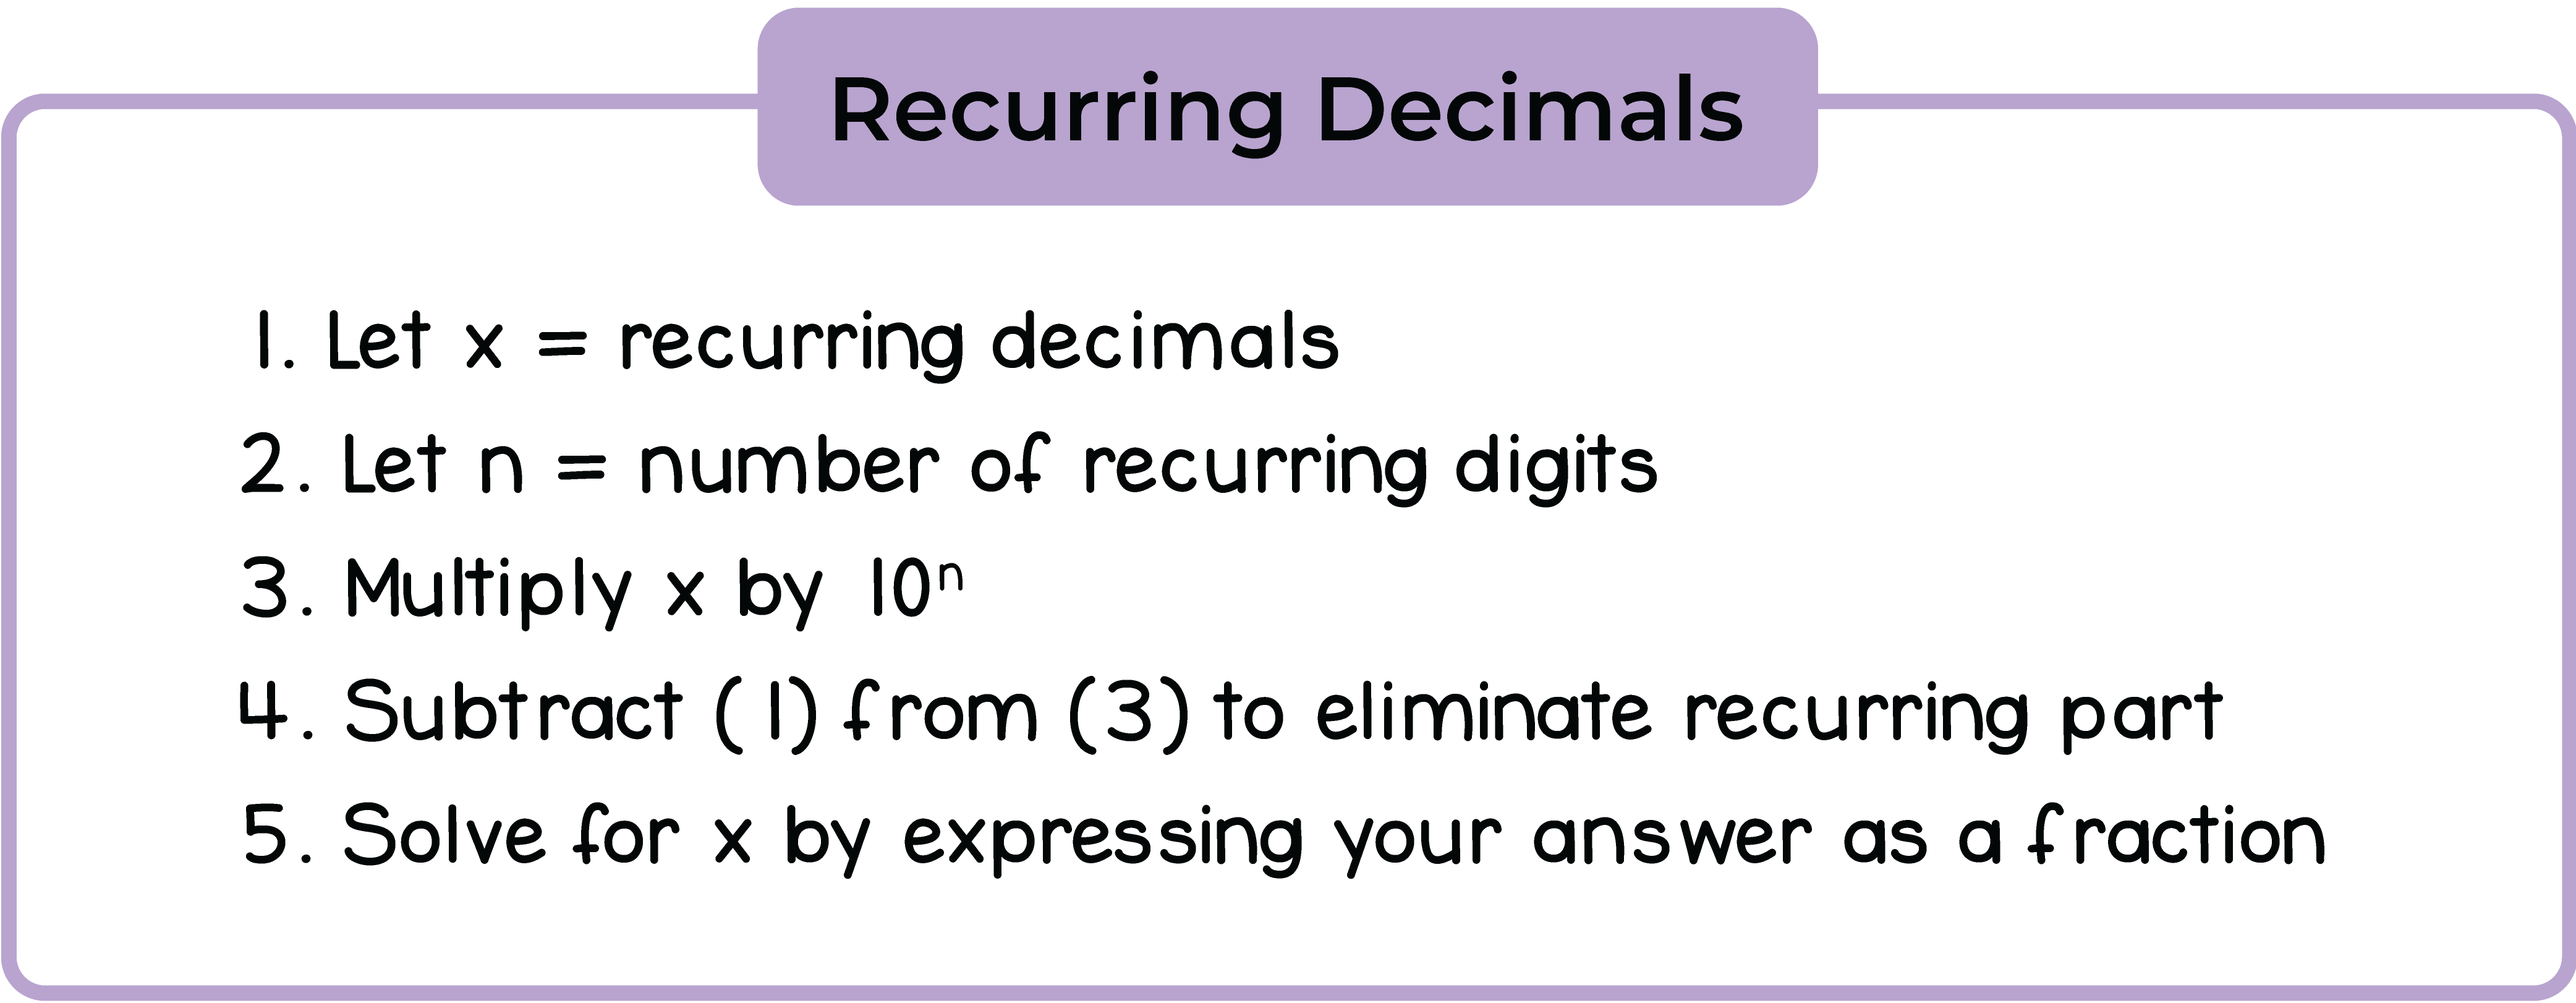 edexcel_igcse_mathematics a_topic 03_decimals_001_recurring decimals